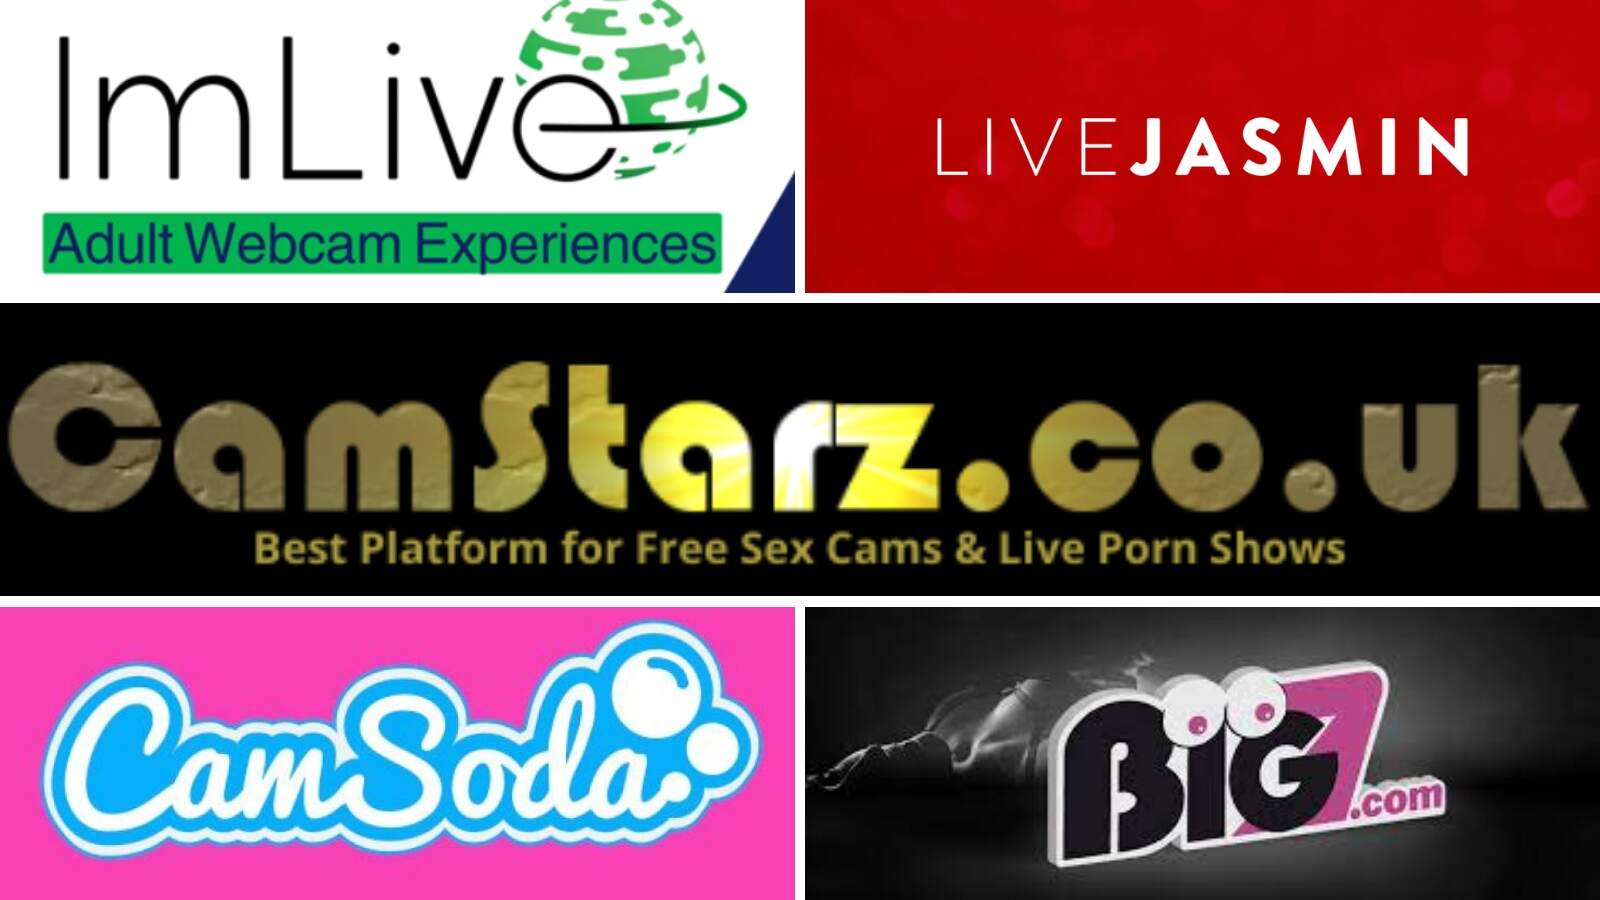 camsoda Archives - CamStarz - Free Adult Webcams Blog